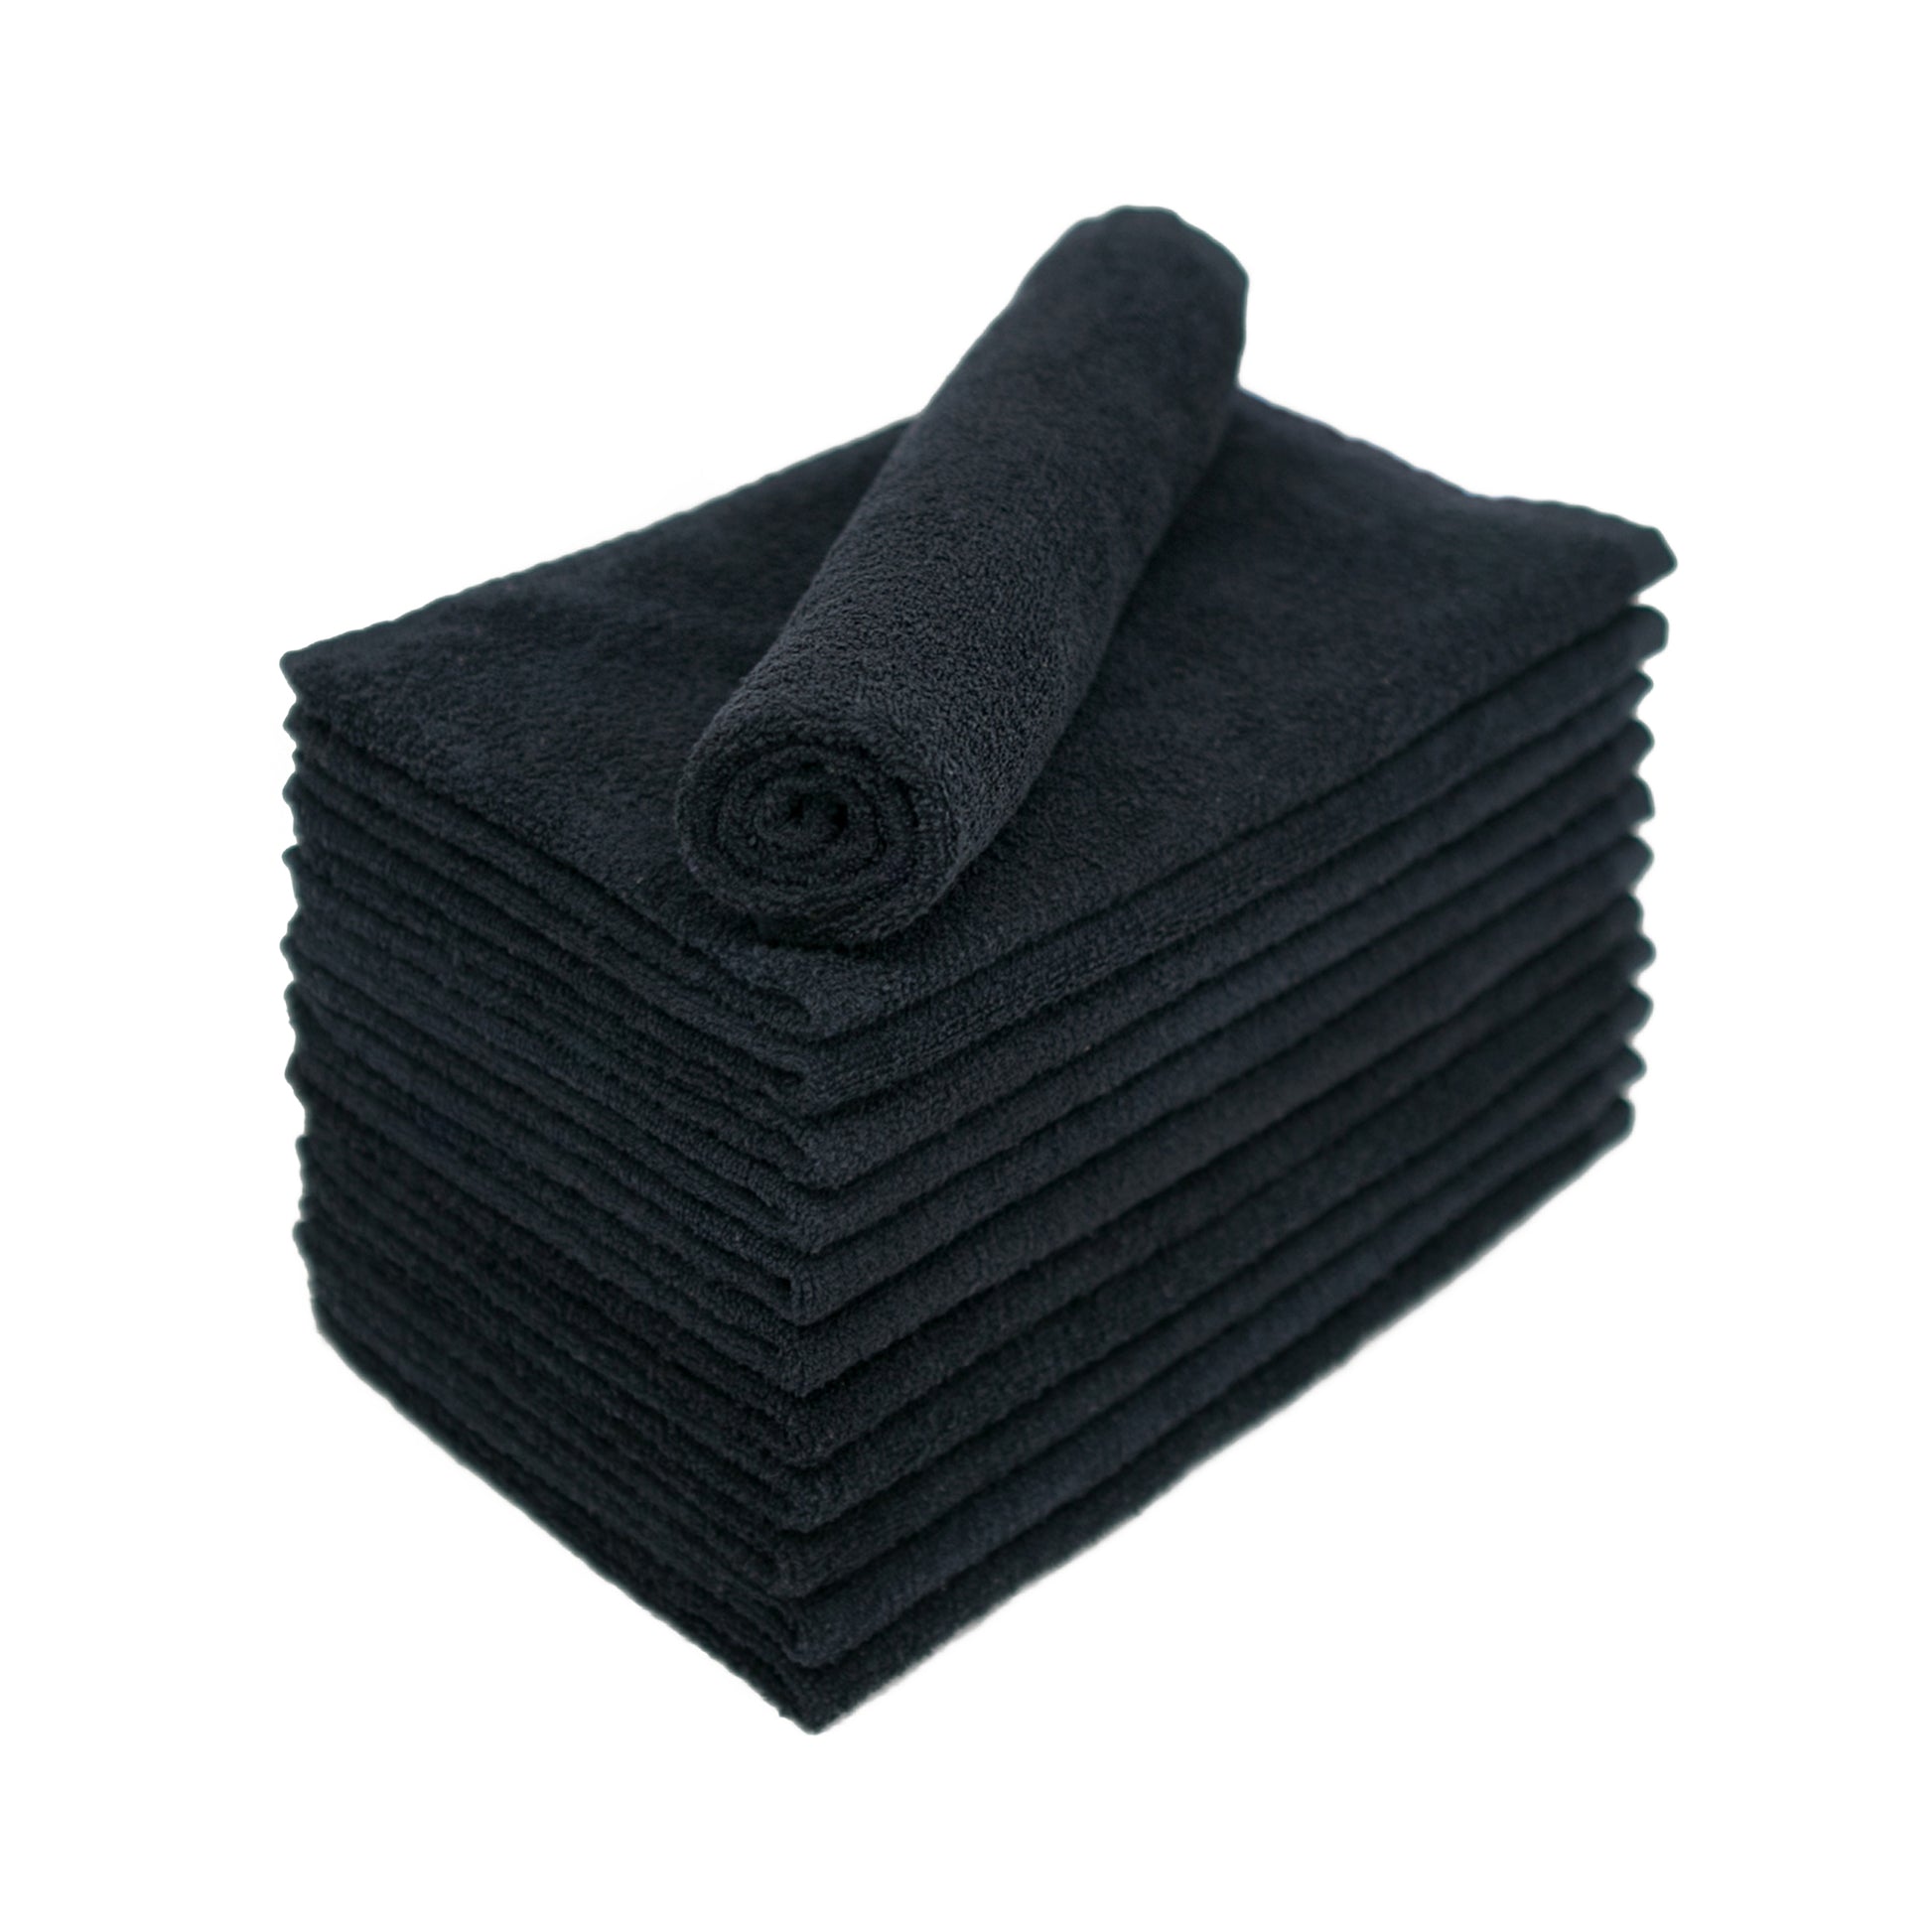 Bleach-Resistant Hand Towels, 16x28